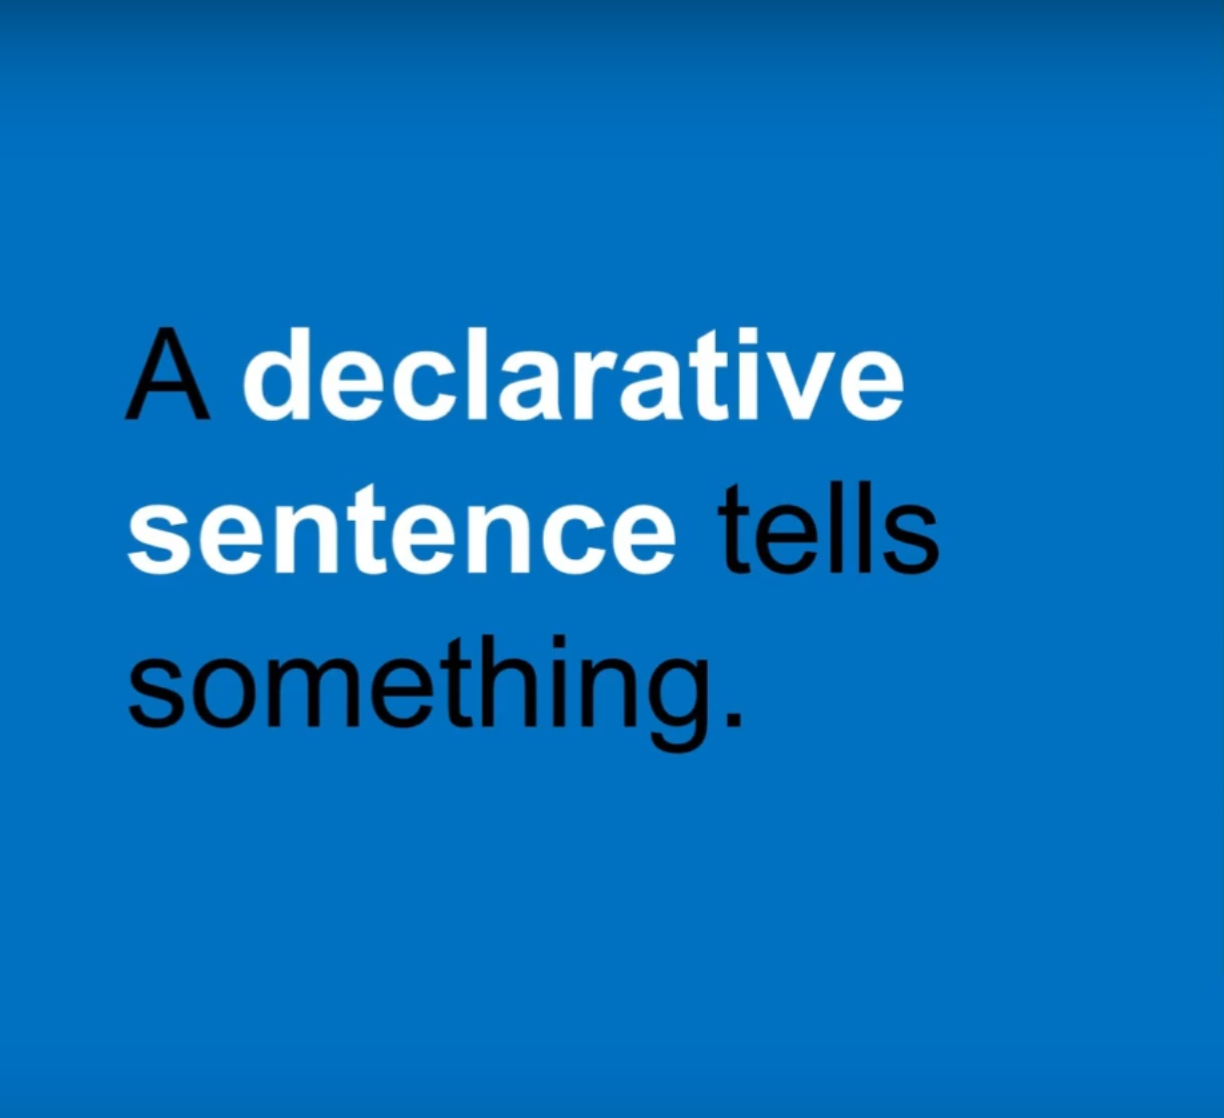 Four Types of Sentences: Declarative, Interrogative, Imperative, Exclamatory